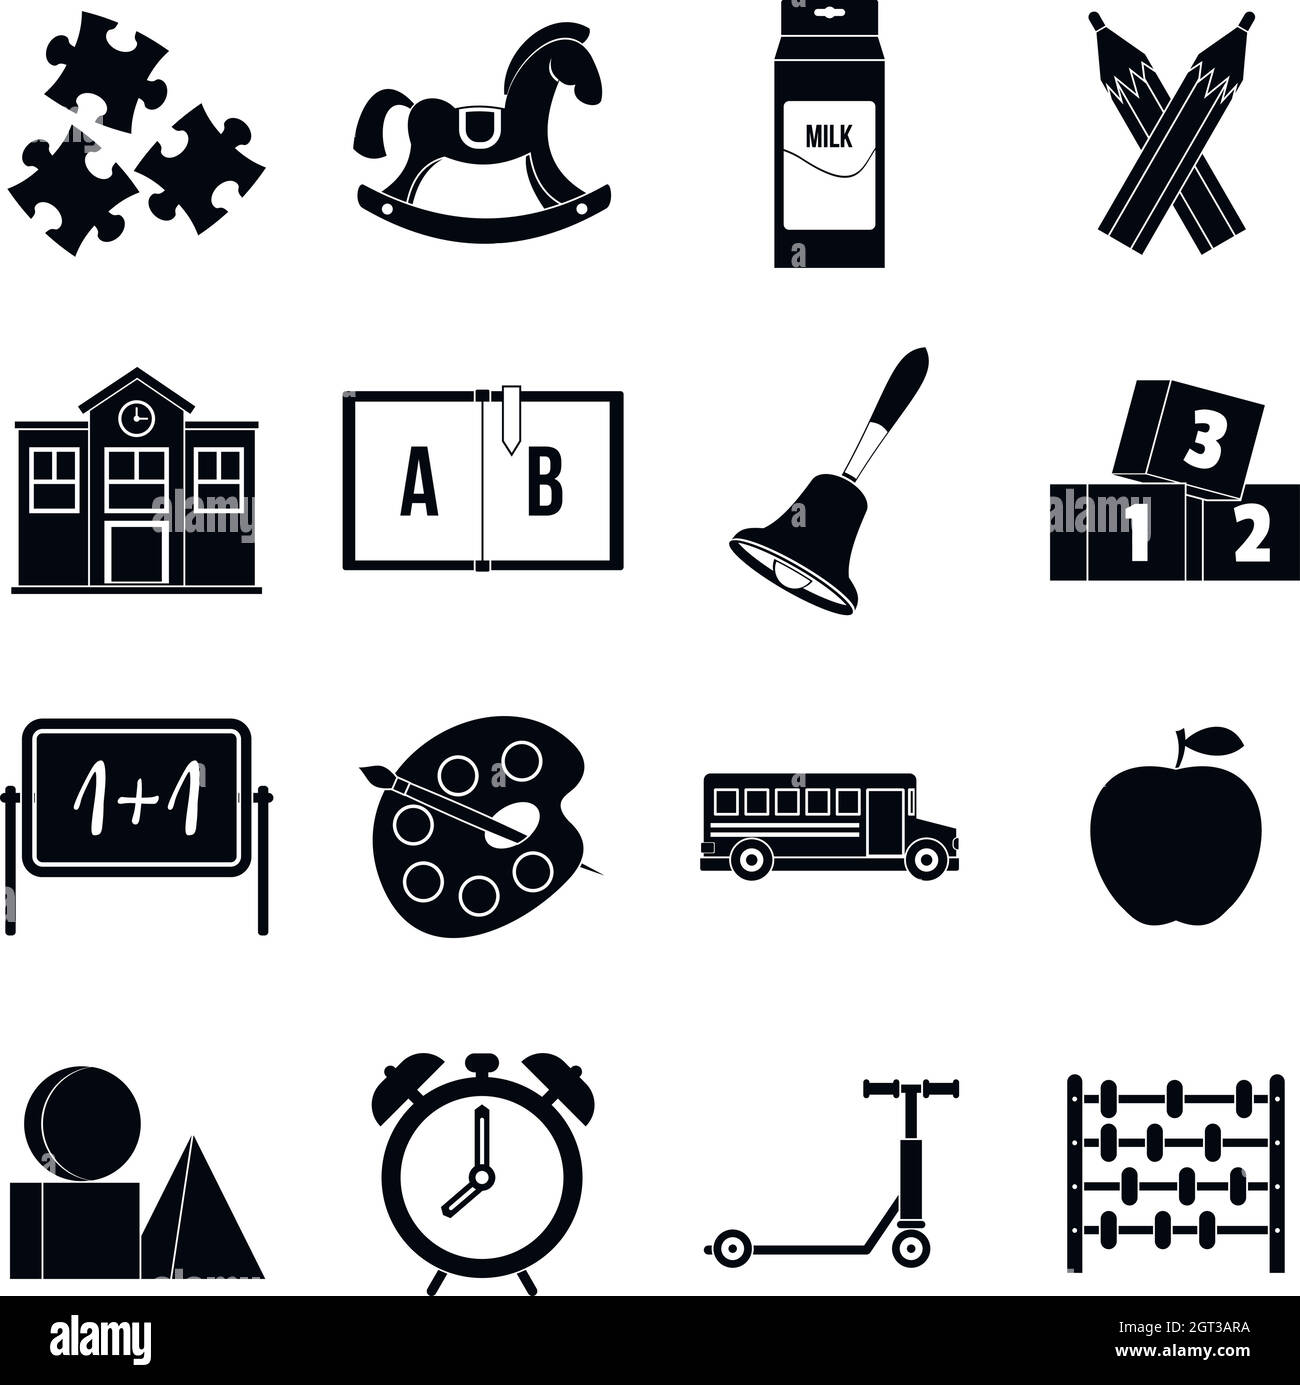 Kindergarten symbol icons set, simple style Stock Vector